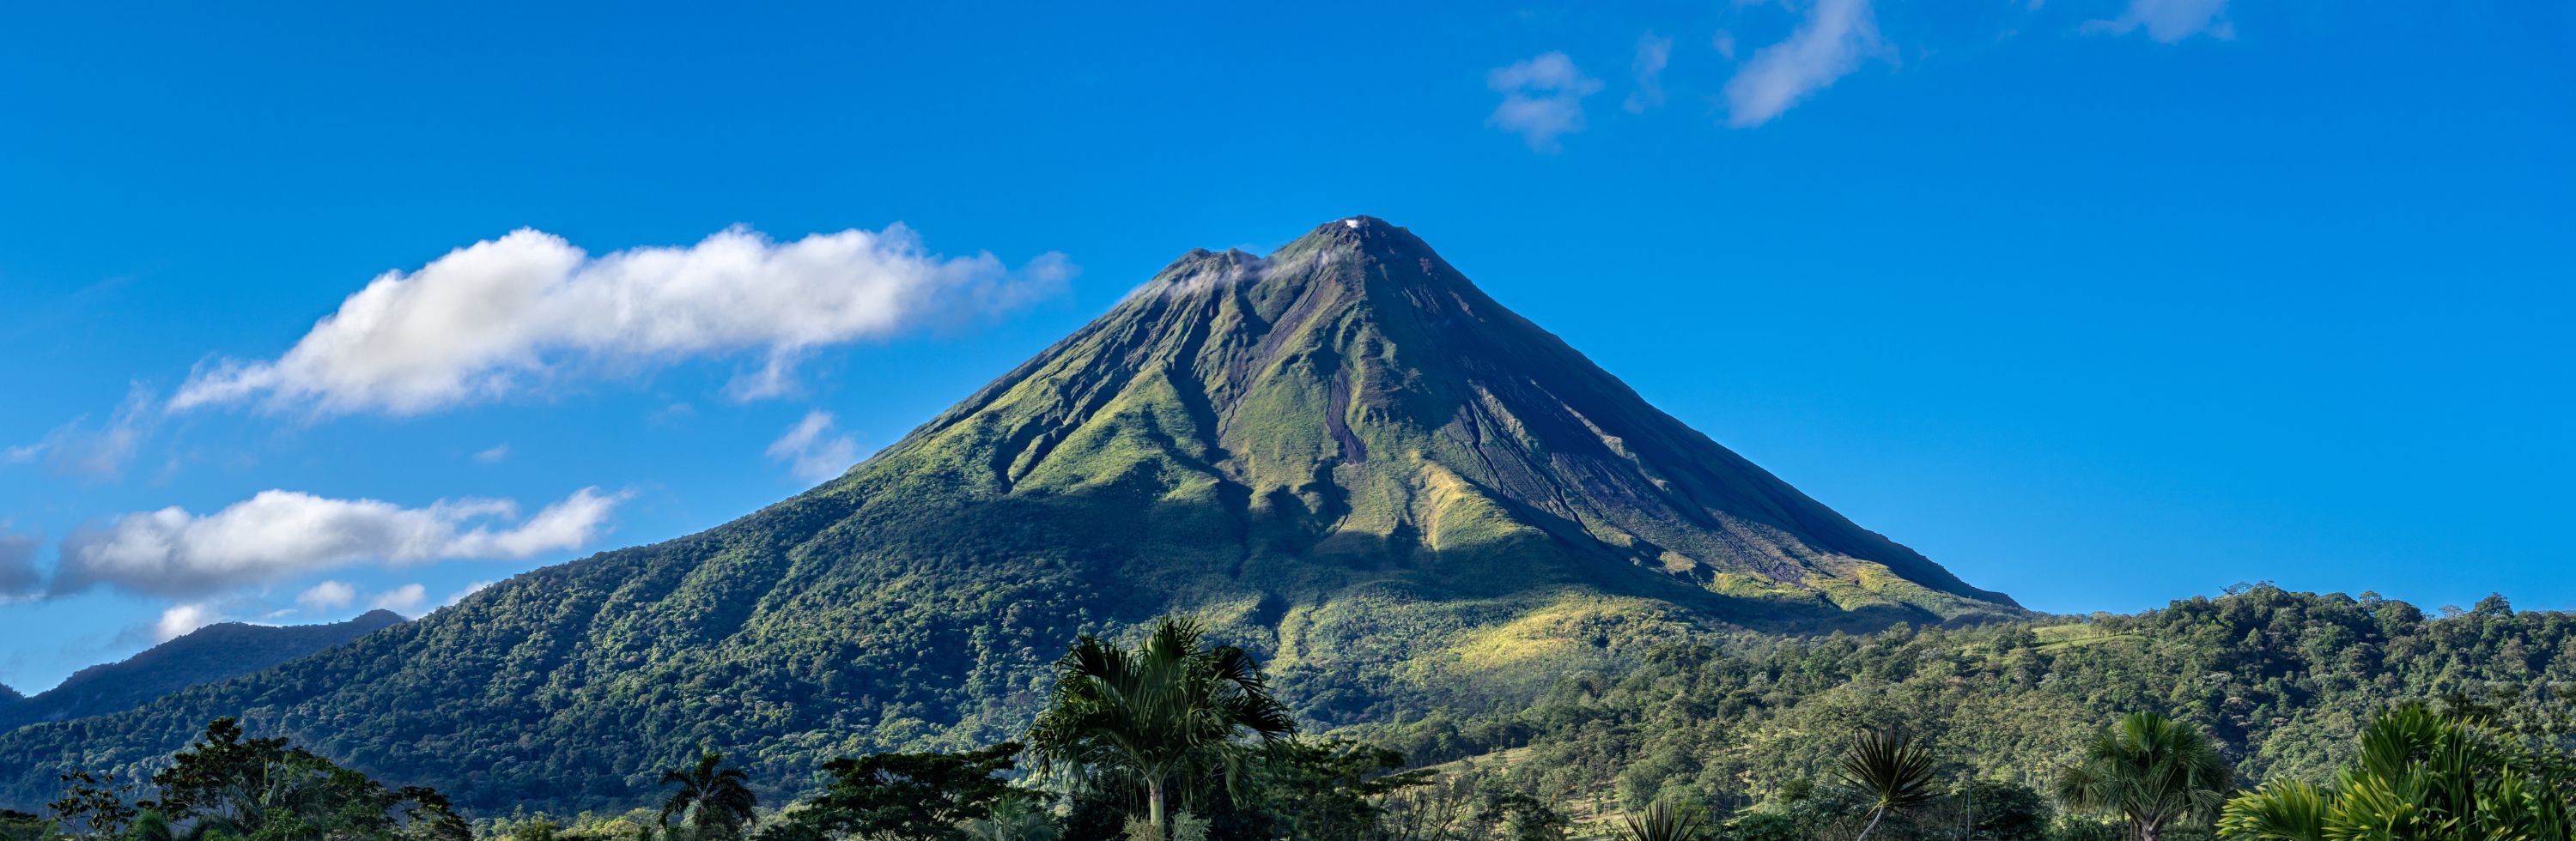 BGYB Destination : Suggestion d'Itinéraire en Costa Rica